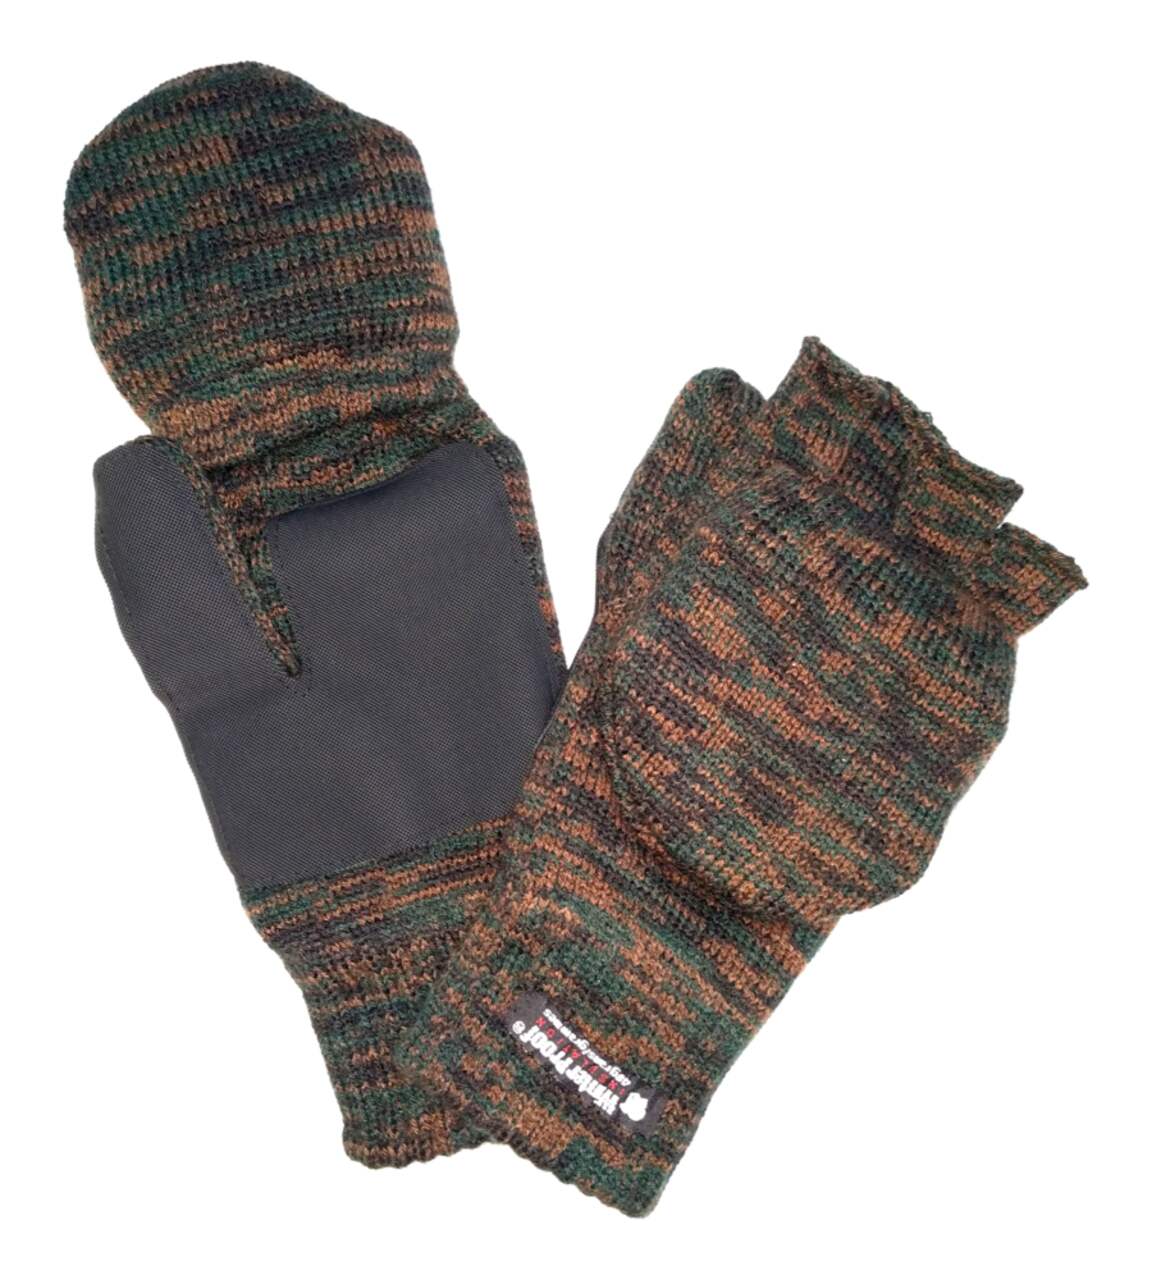 Hot Paws Men's Convertible Thermal Fleece Knit Flip Top Winter